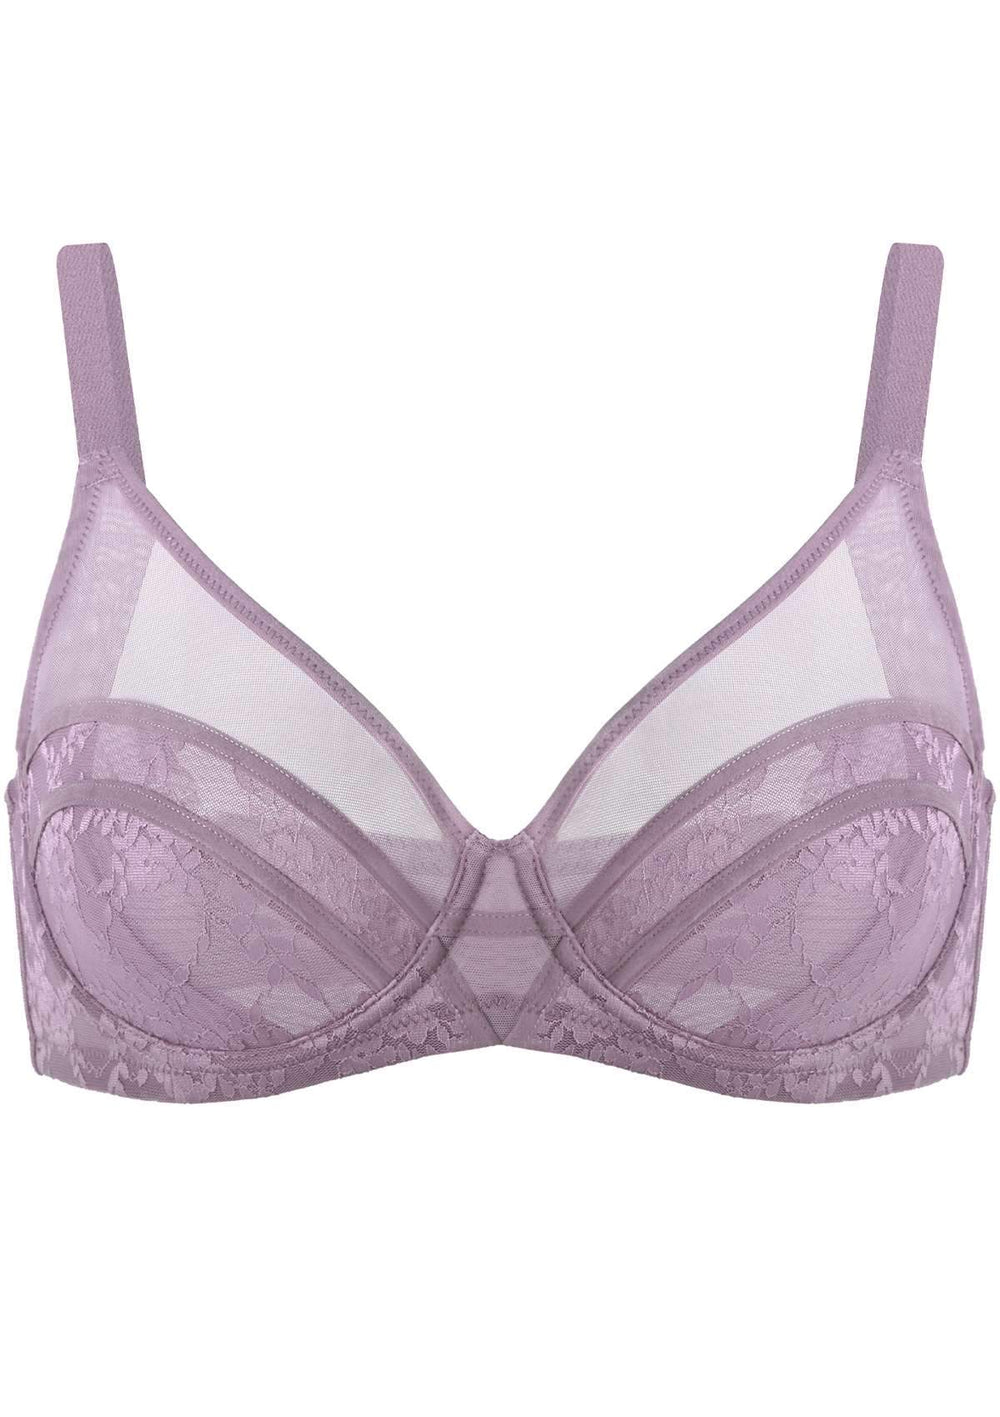 Soma Sensuous Lace Underwire Demi Unlined Sheer Lavender (Purple) Size  36DDD (F)